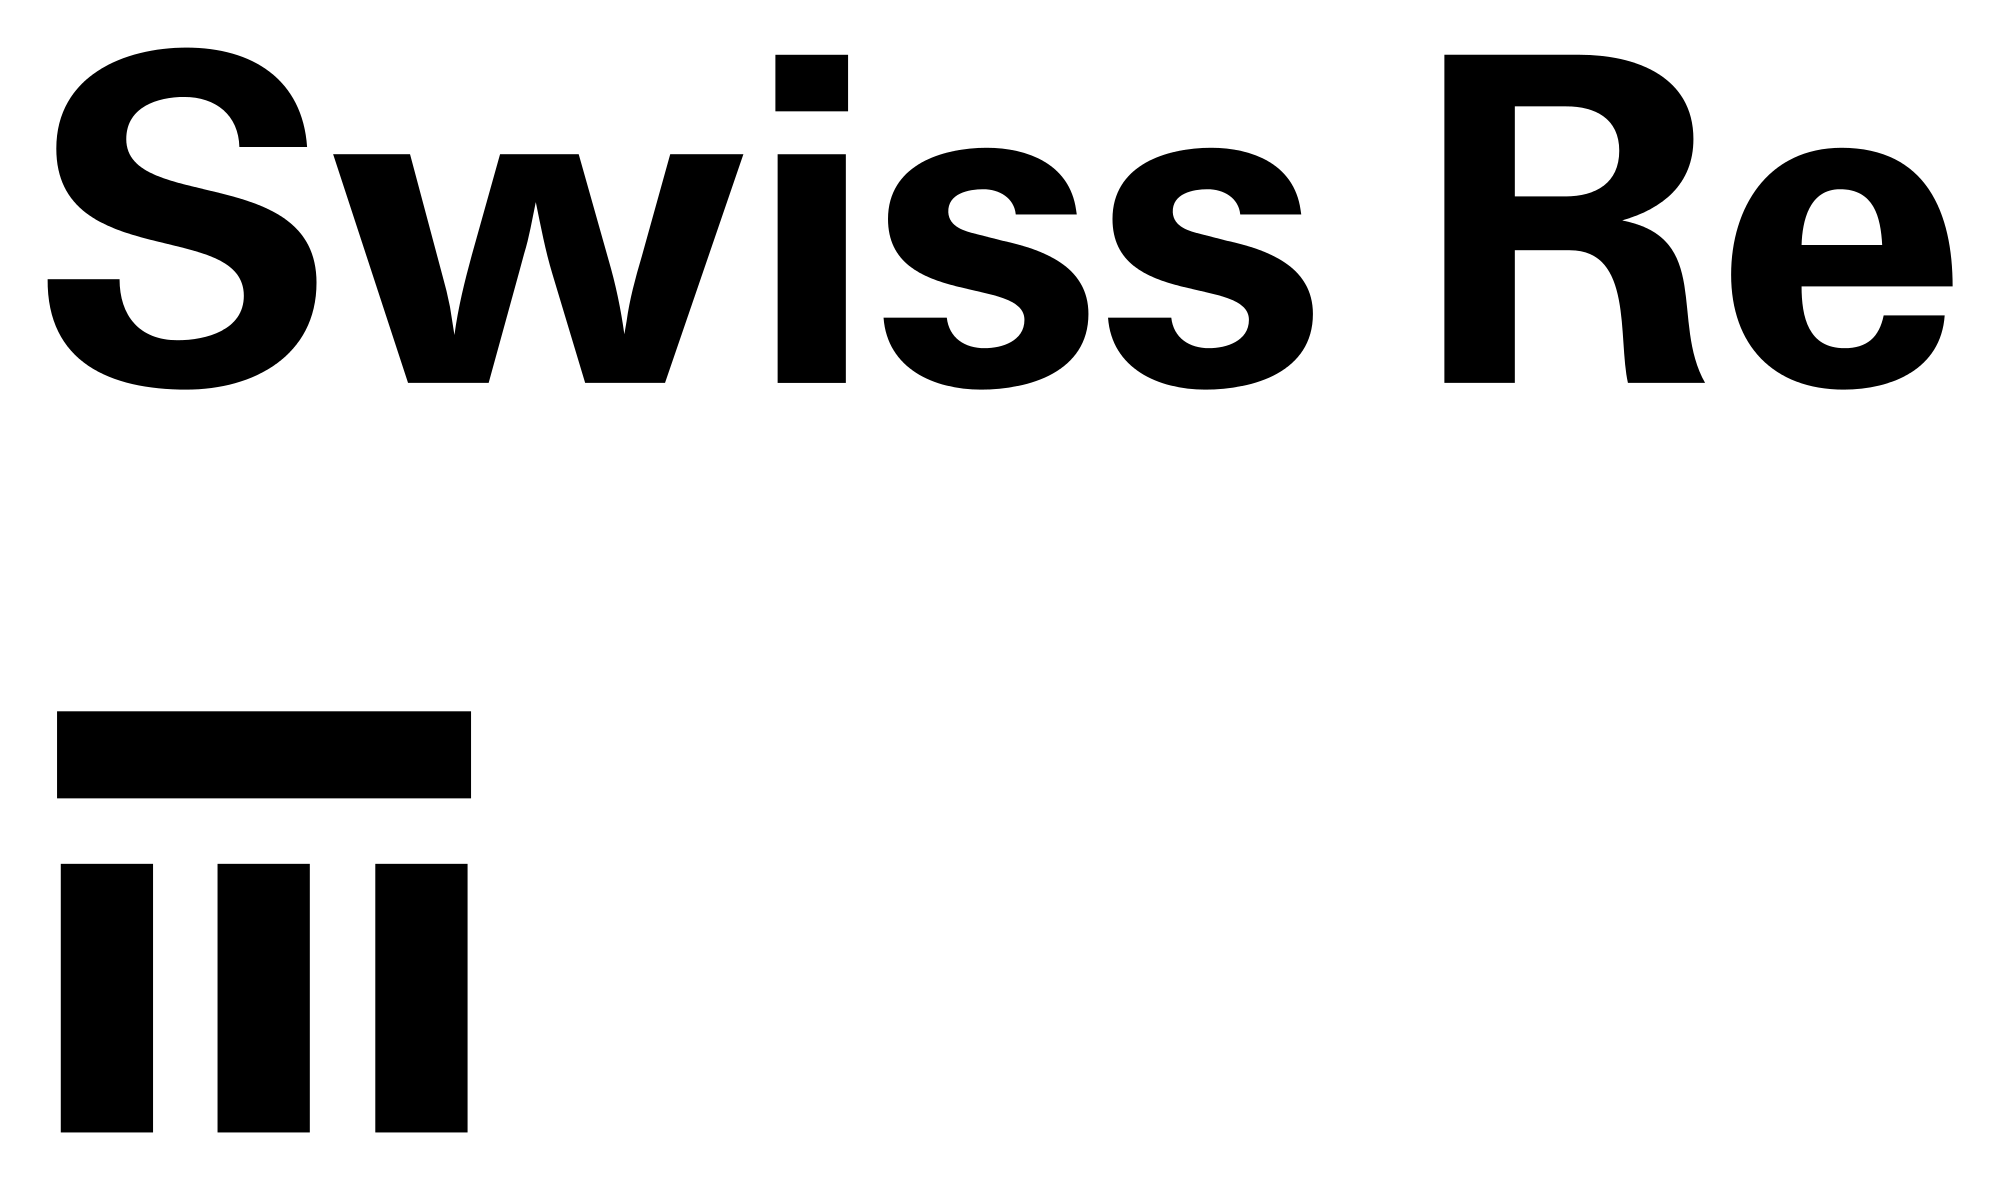 Re Logo - File:Swiss Re 2013 logo.svg - Wikimedia Commons